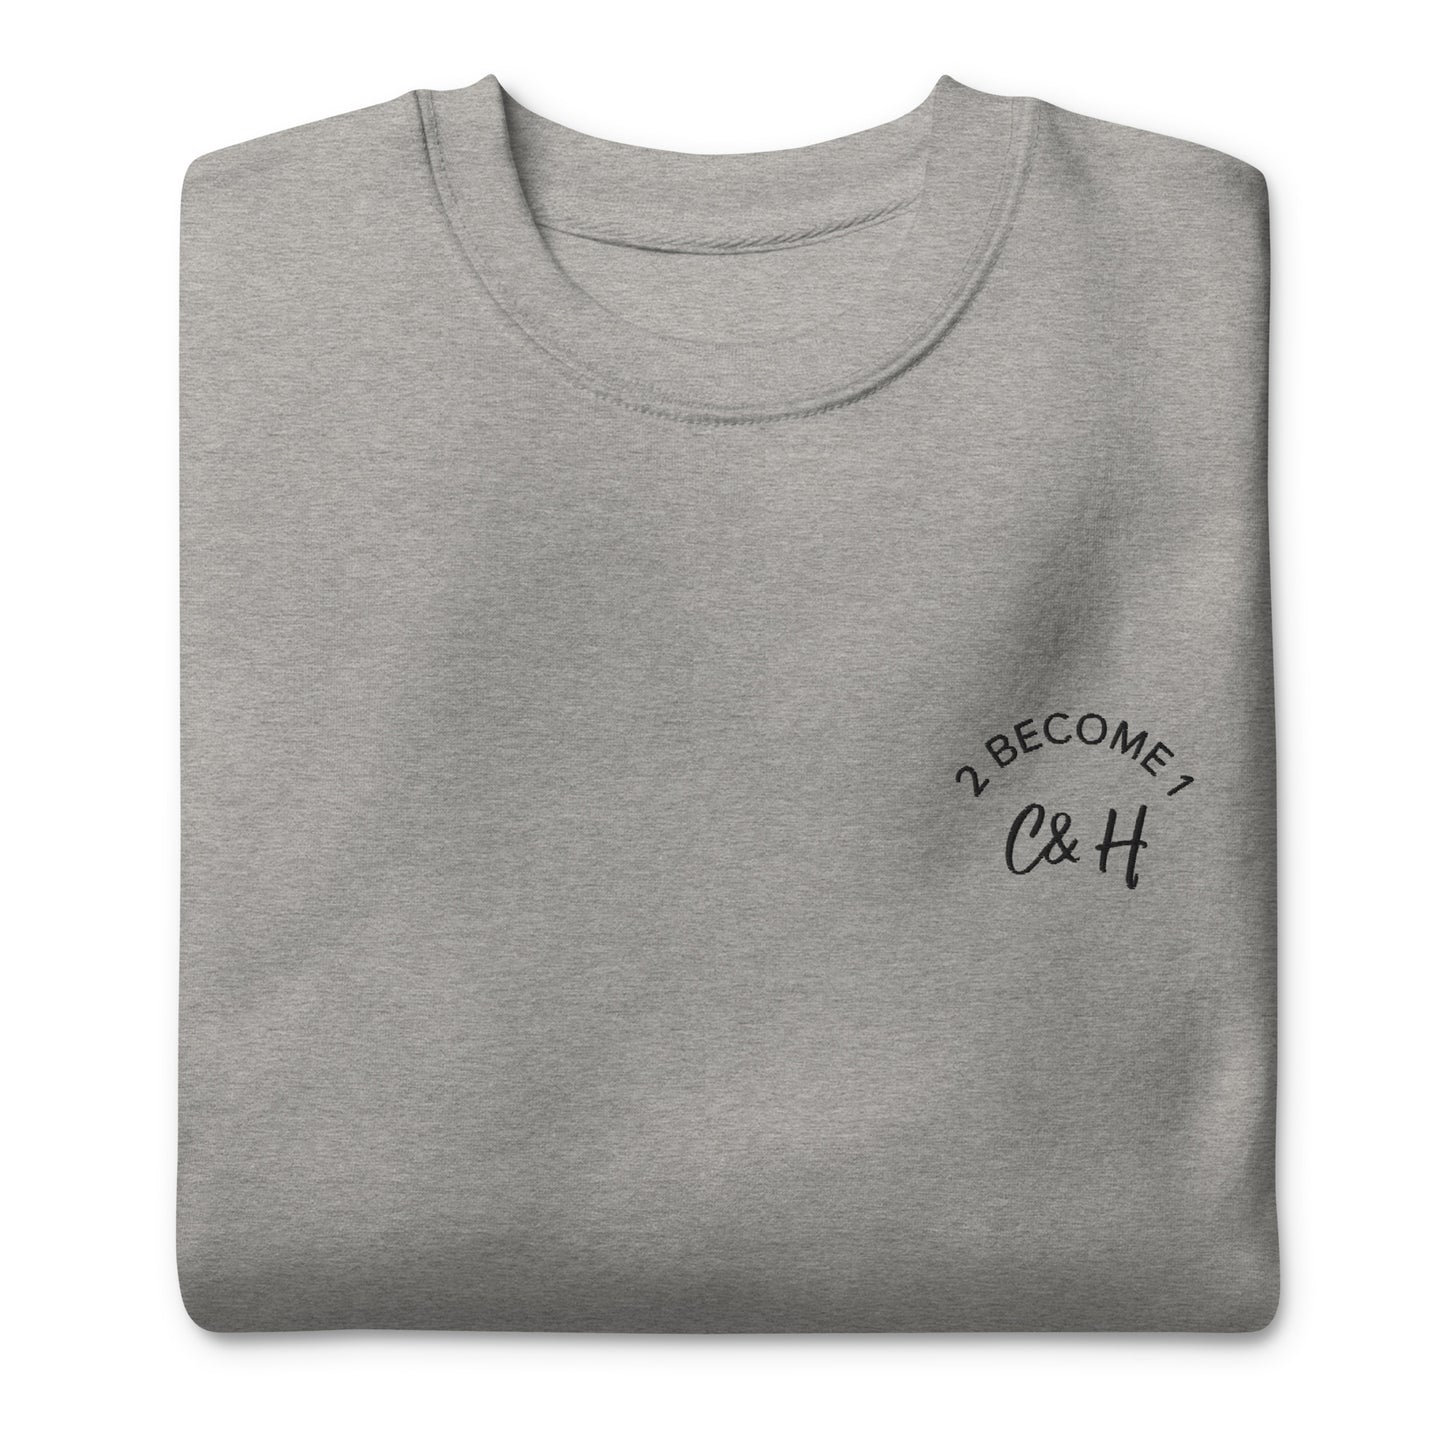 Personalized Sweatshirt 2 Become 1